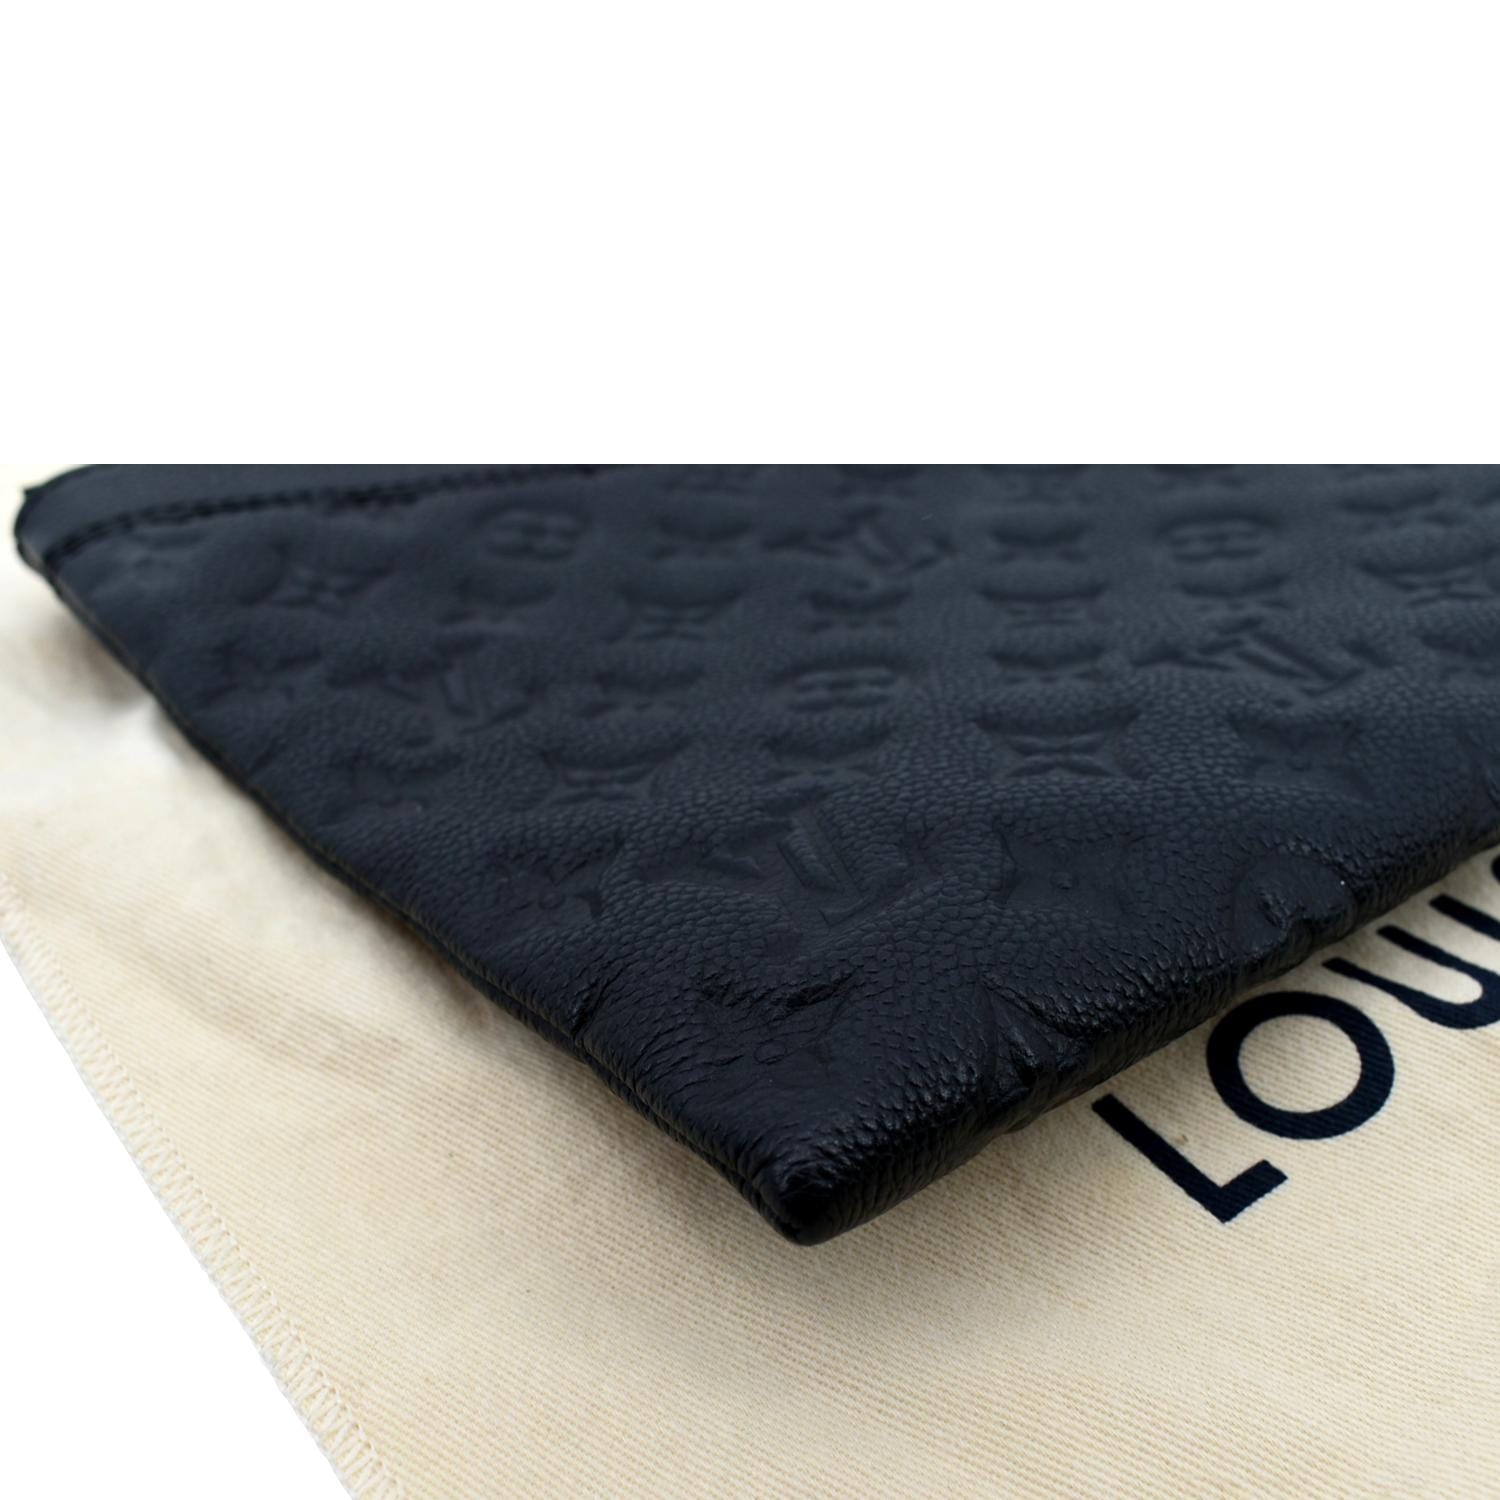 Louis Vuitton - Daily Pouch - Monogram Leather - Black - Women - Luxury